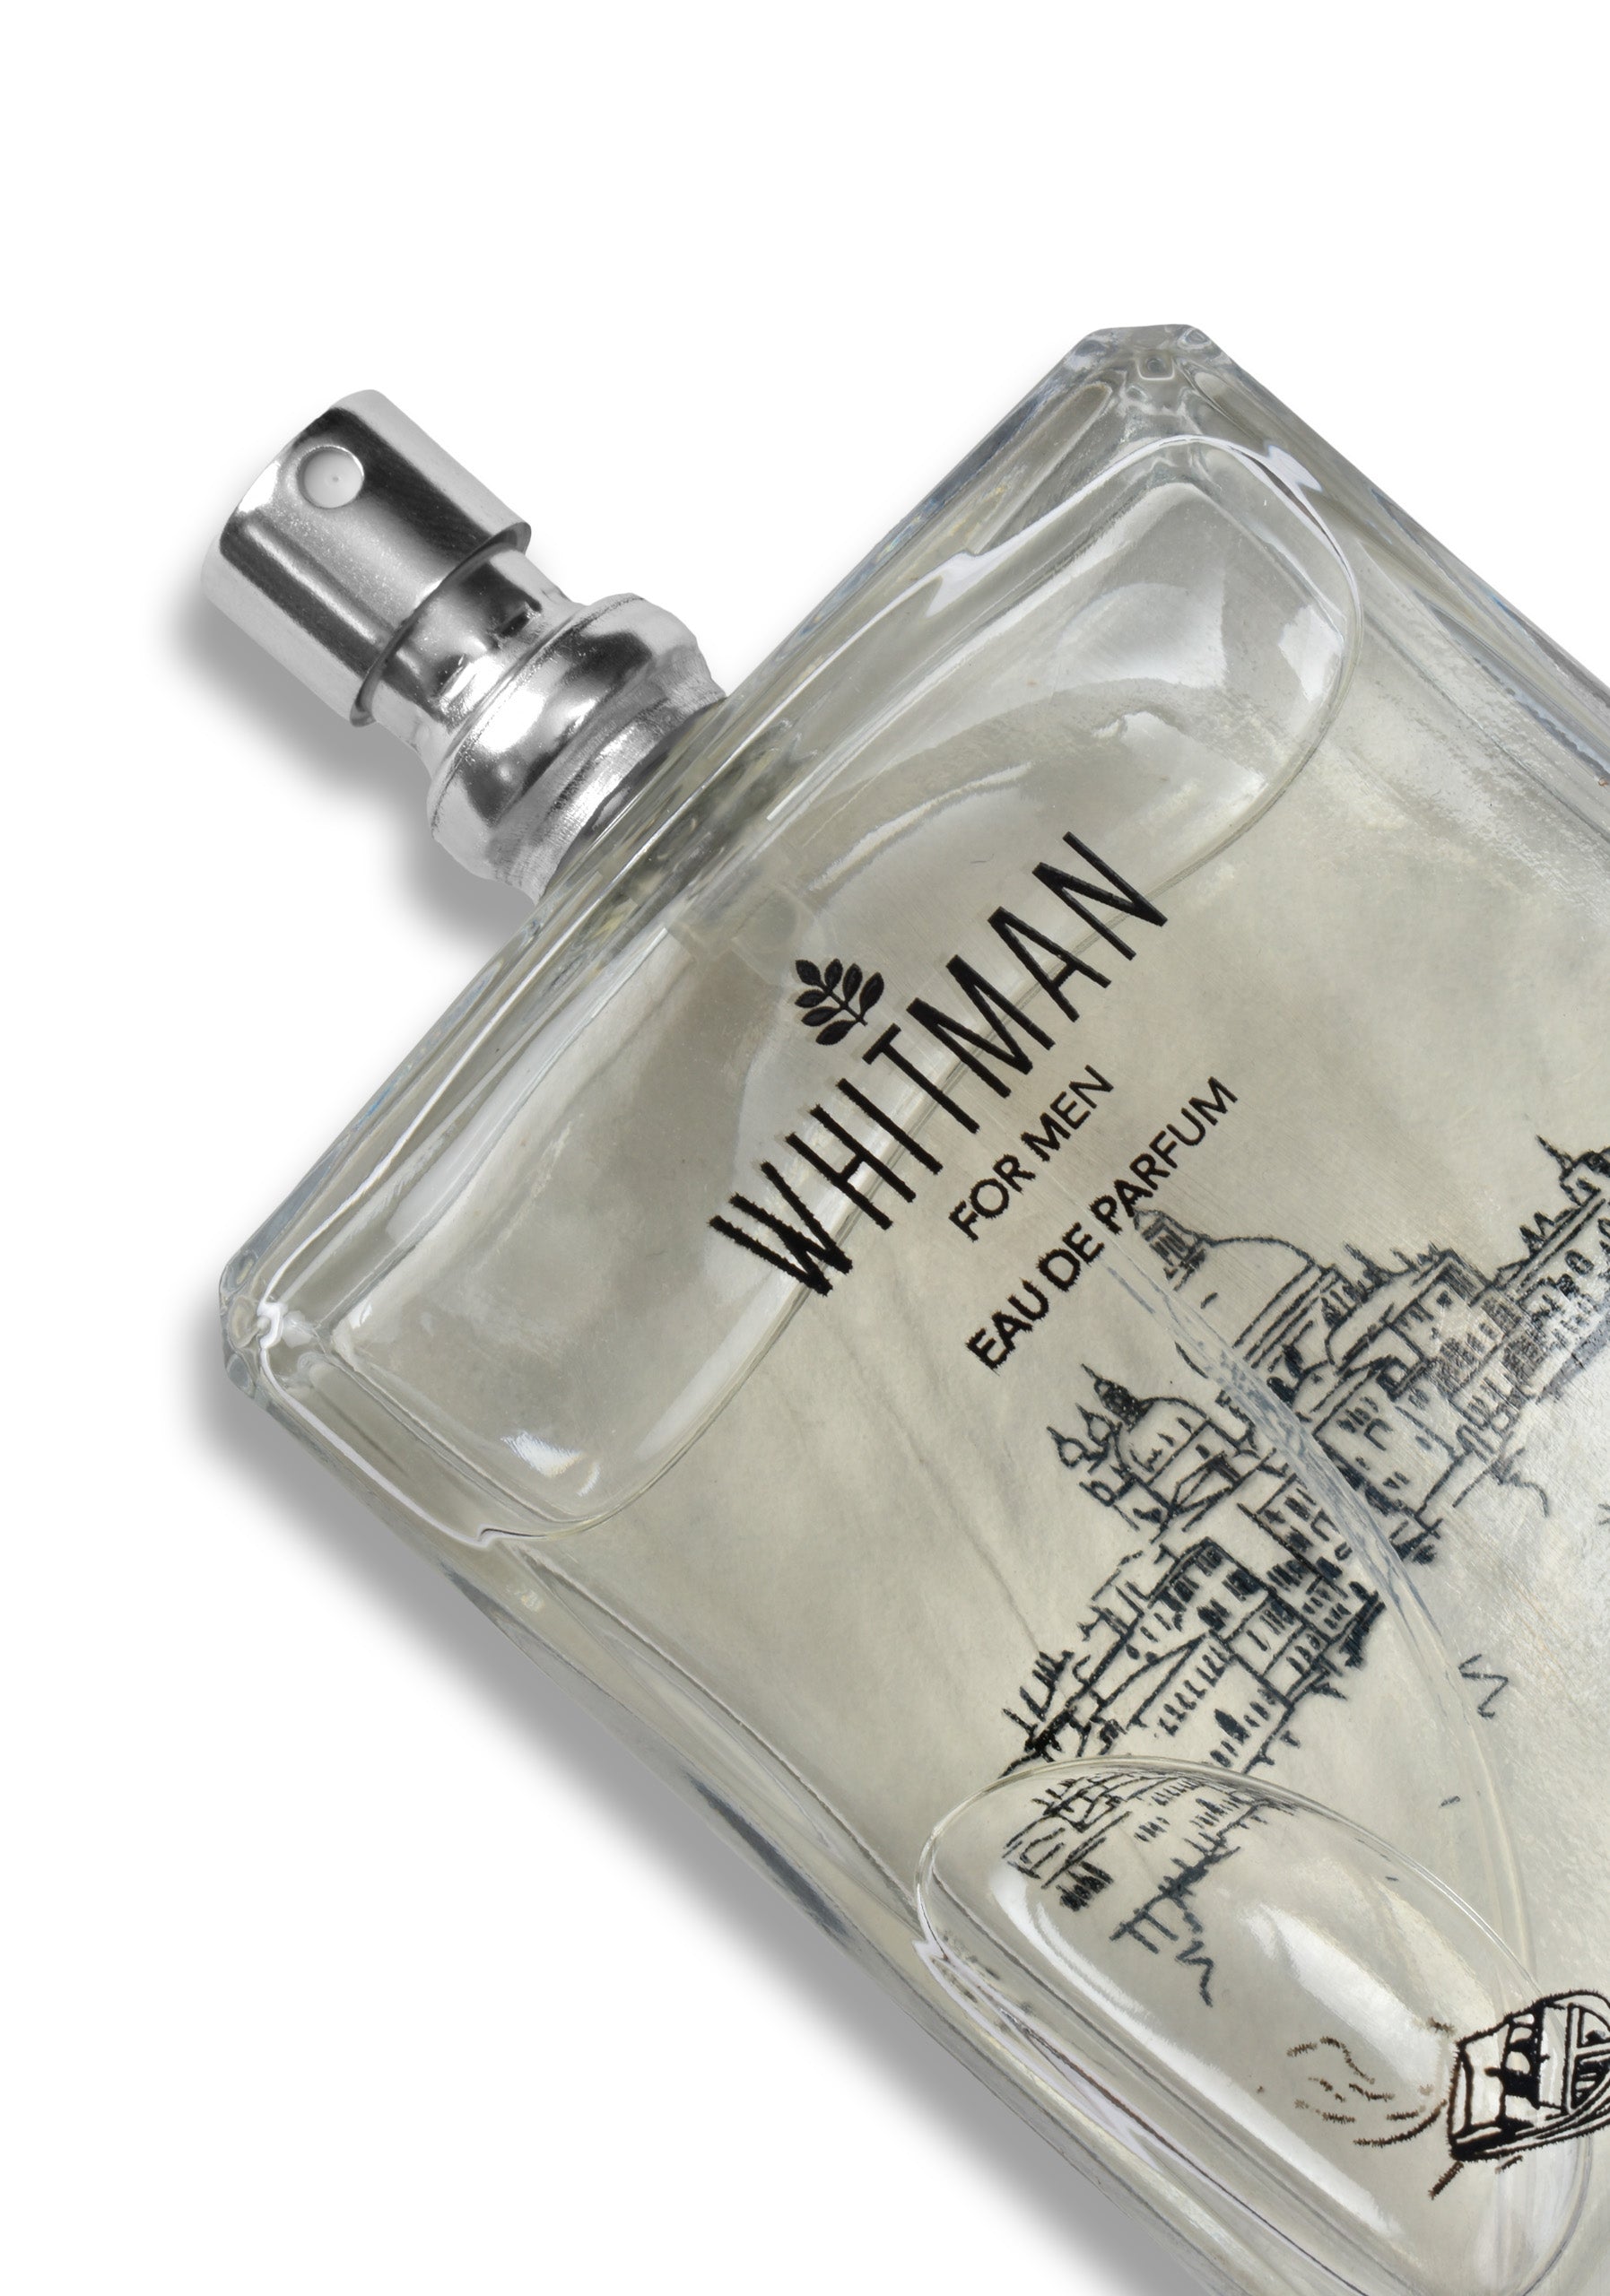 Perfume Whitman